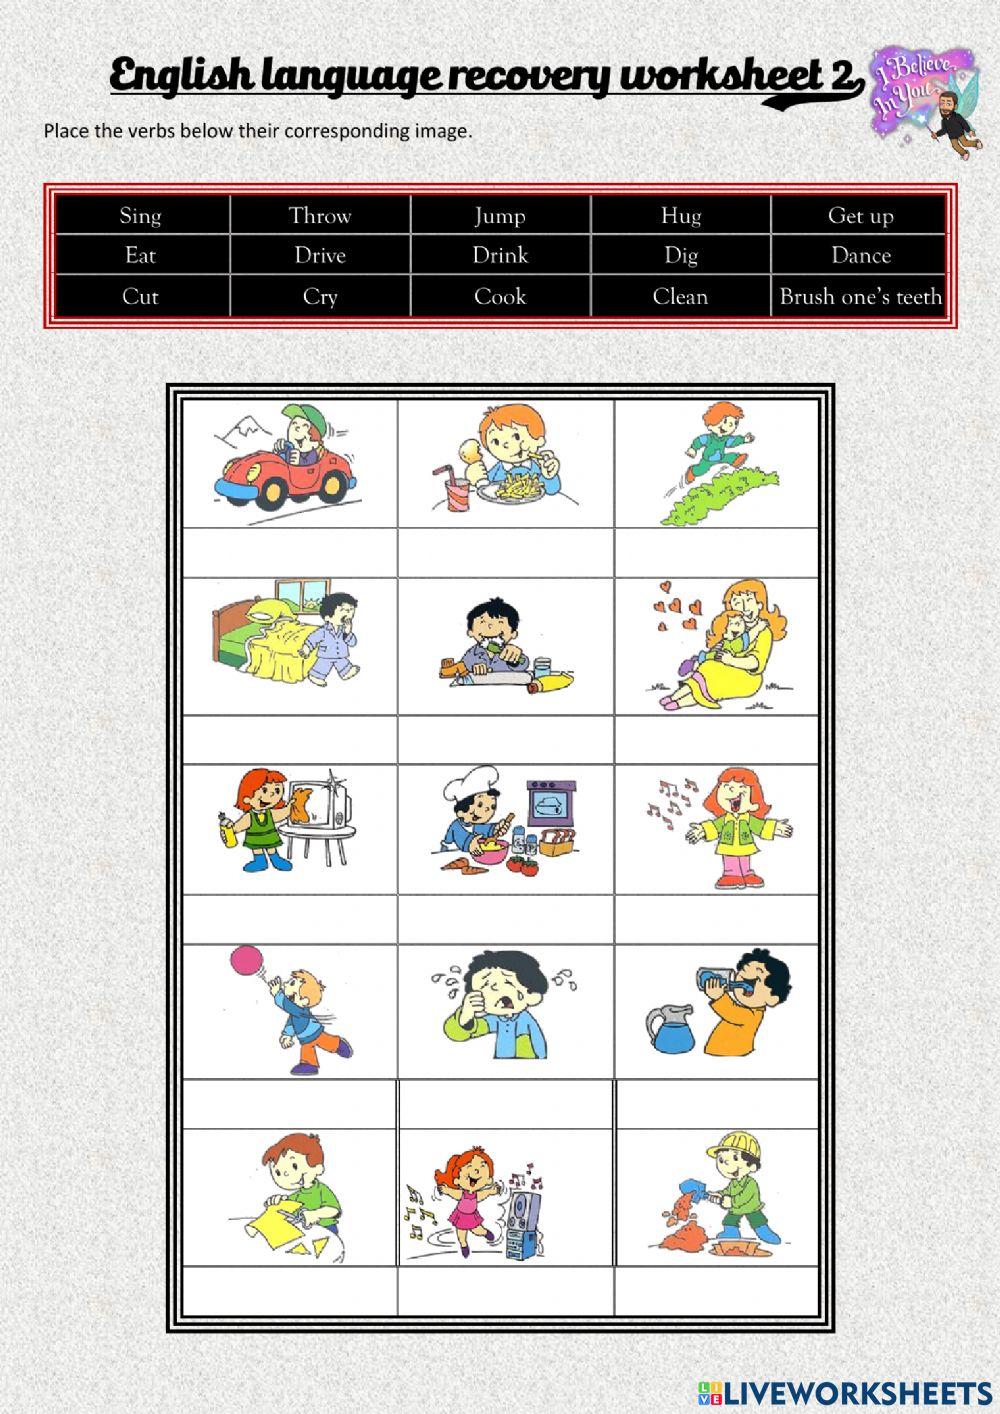 English language recovery worksheet 2